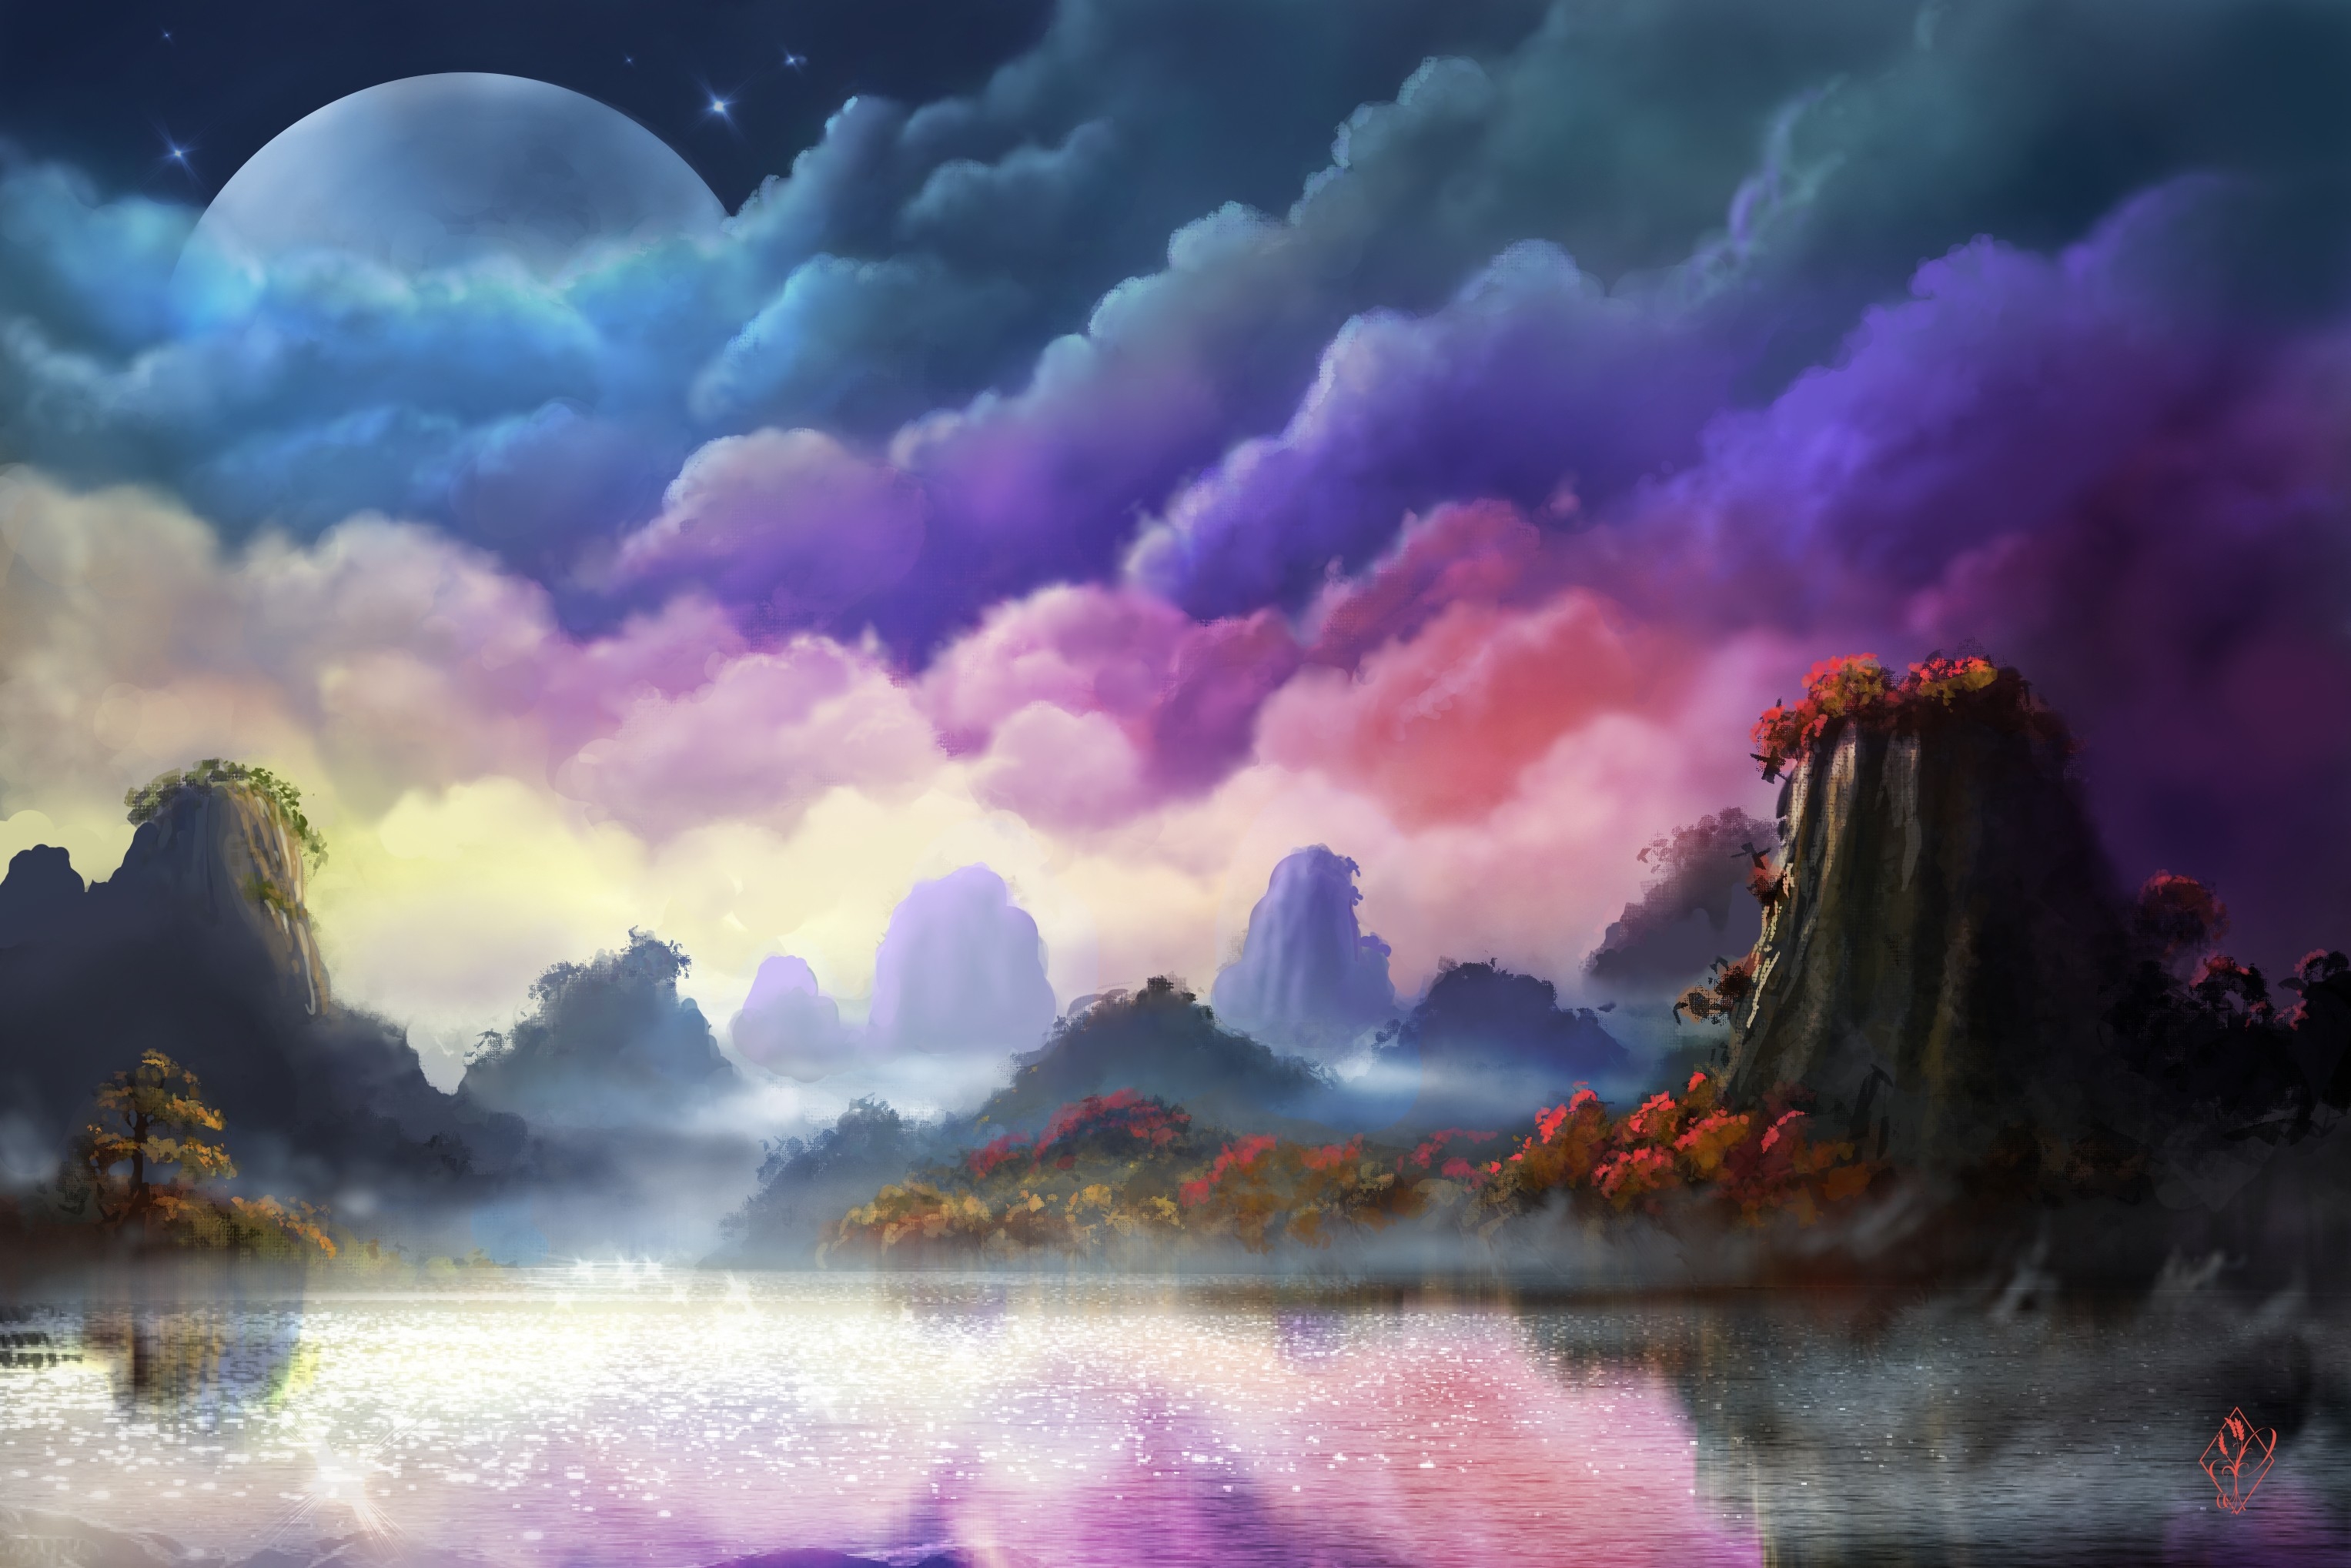 Autumn Fantasy Forest 4K wallpaper download